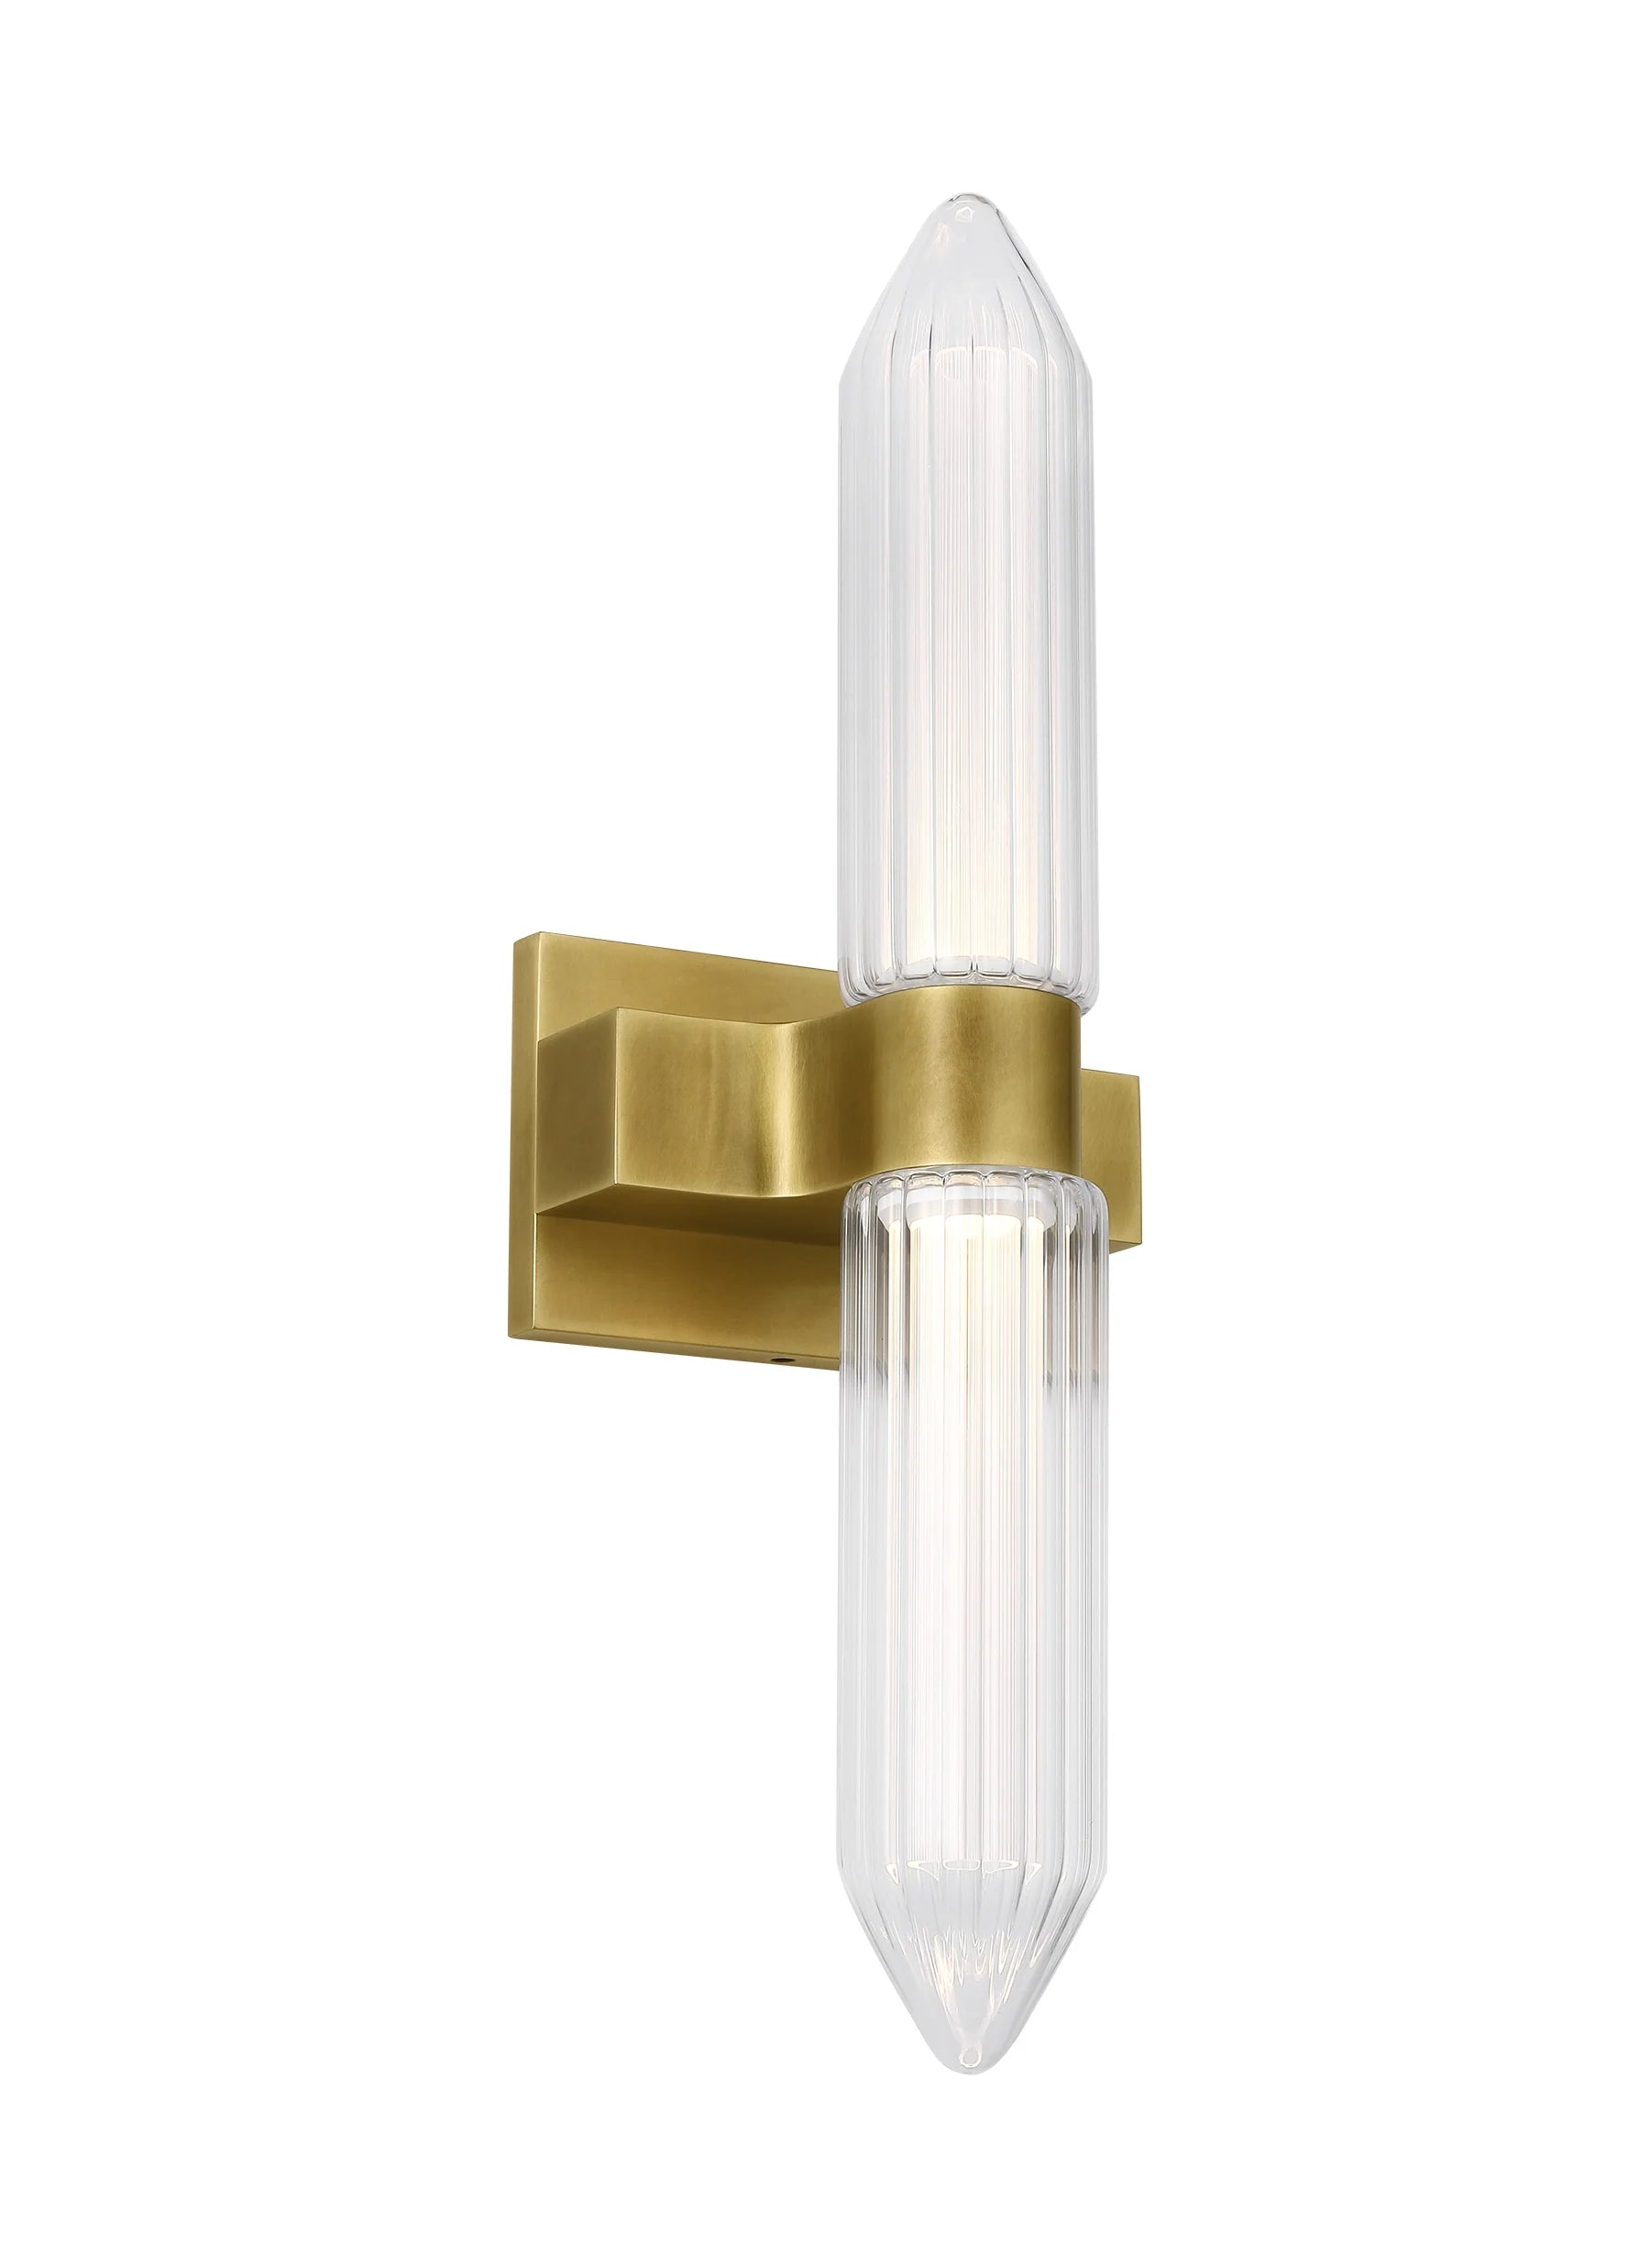 Tech Lighting Langston Brass and Glass Medium Wall Sconce Lighting Affairs